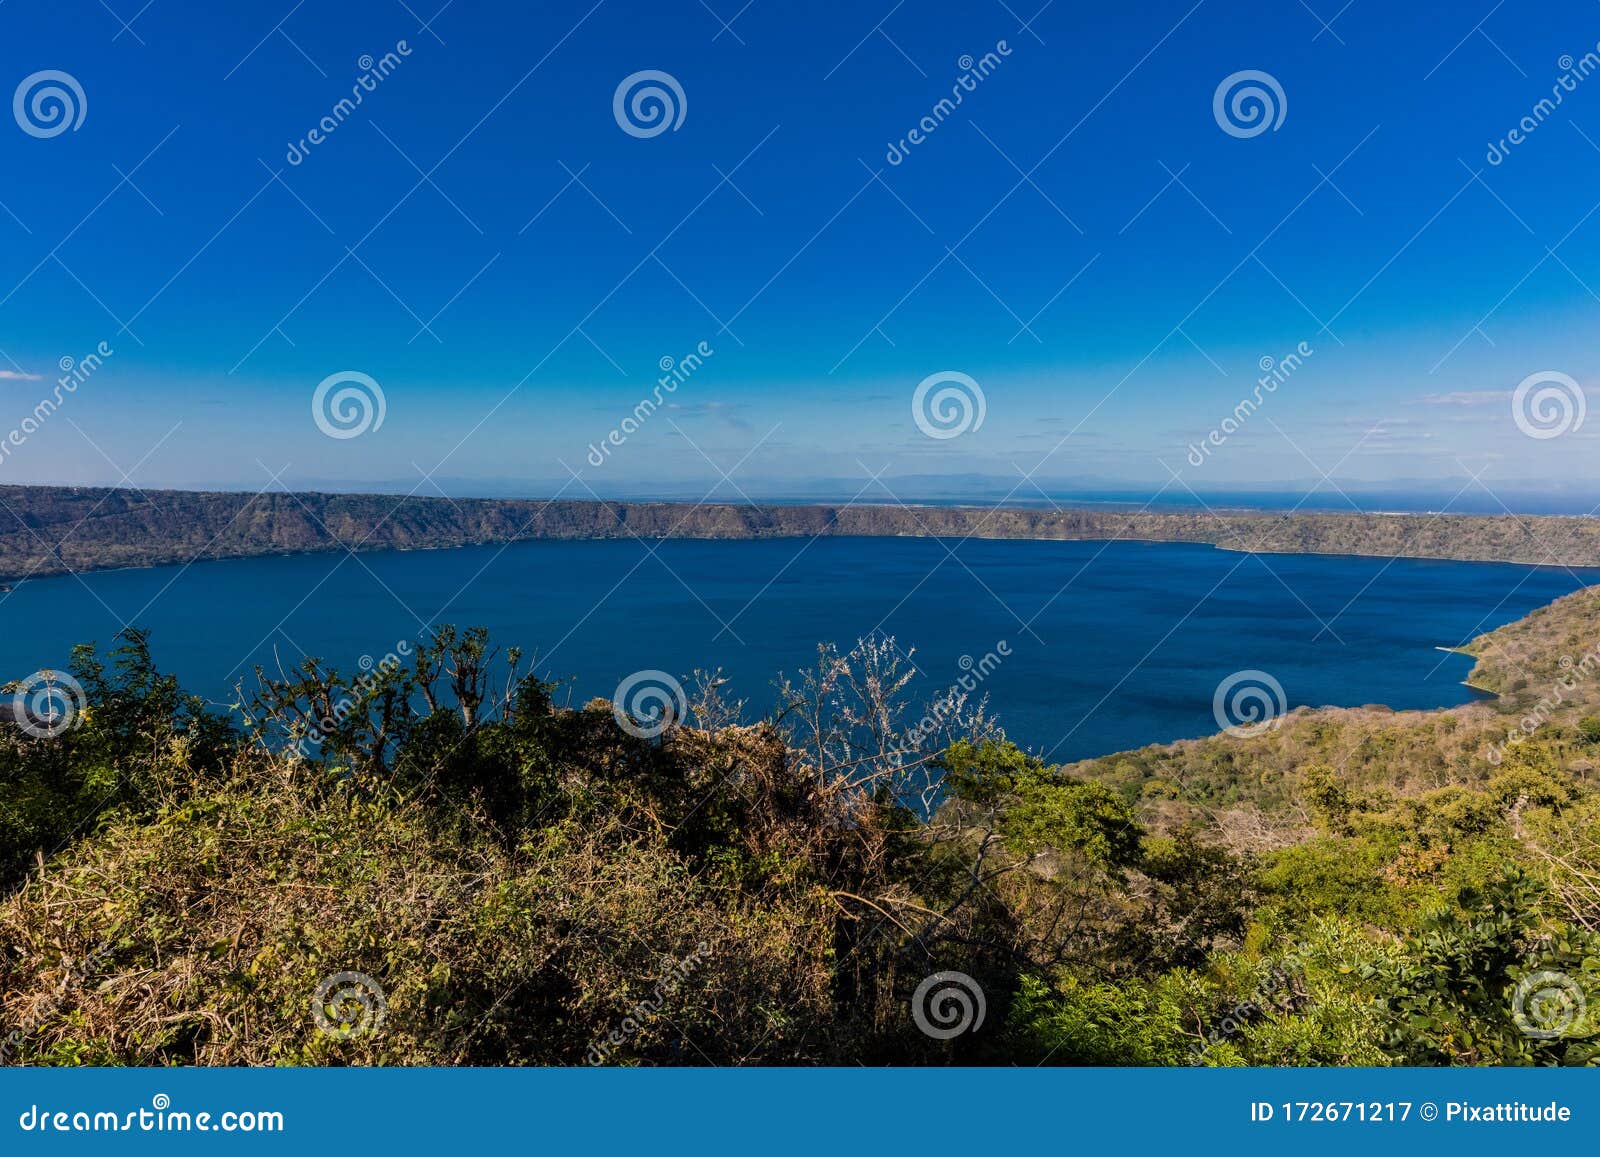 laguna de apoyo volcano lake granada nicaragua